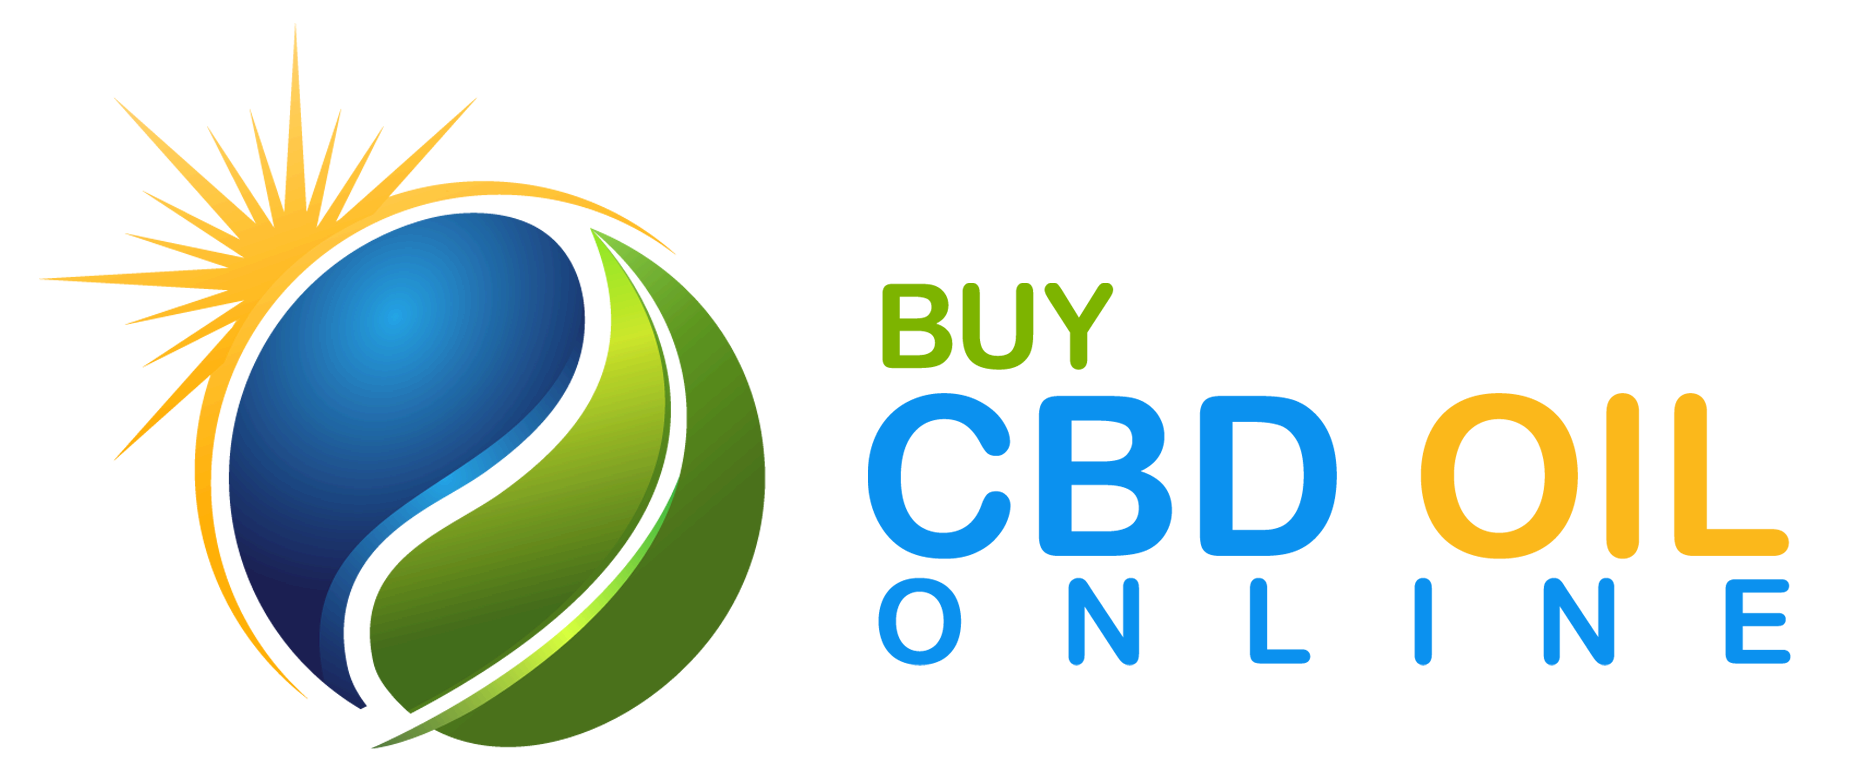 Buy CBD Oil Online Real Scientific Hemp Oil Salve